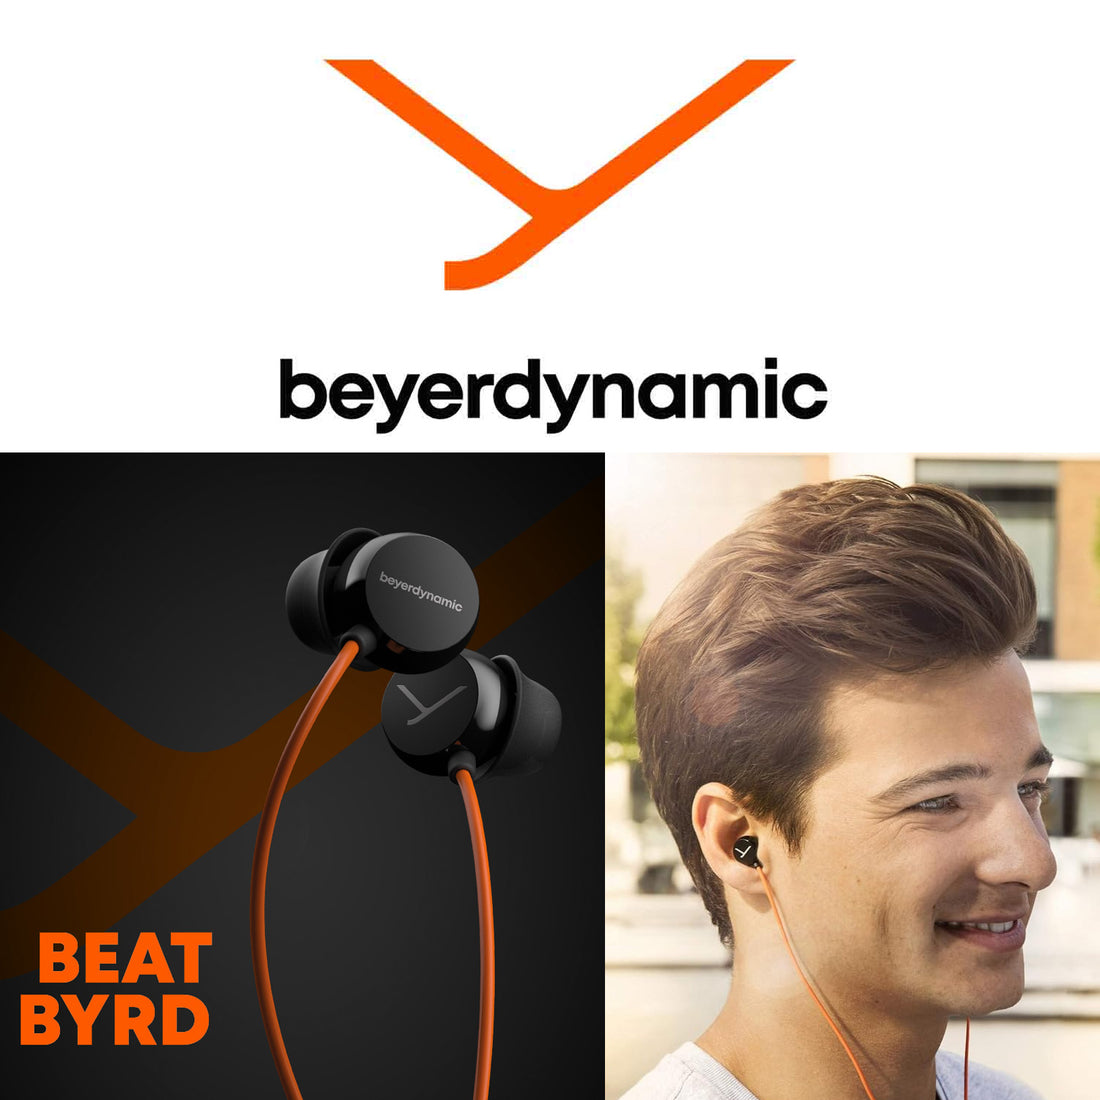 Audifonos Beyerdynamic Beat Byrd